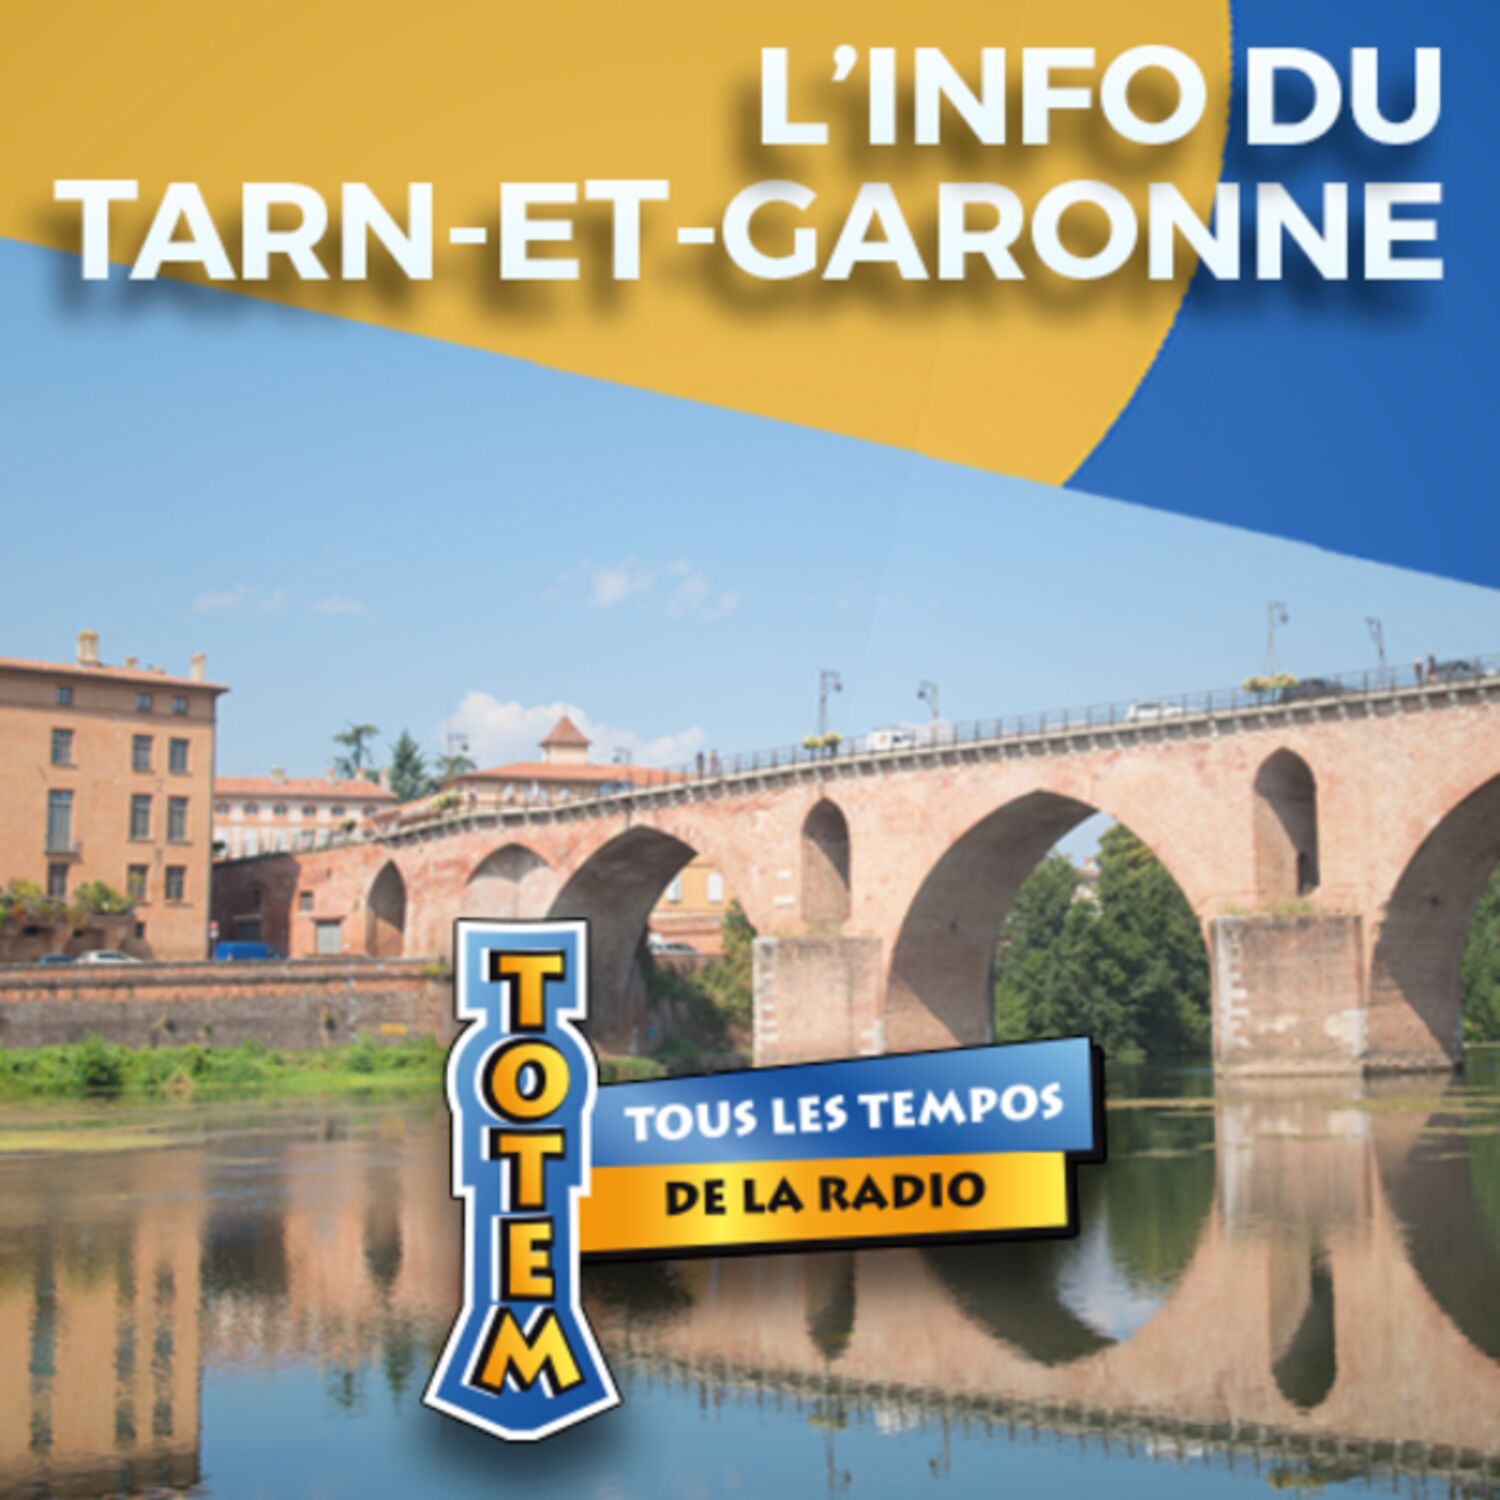 L'info du Tarn-et-Garonne du 26/05/23 à 12h28